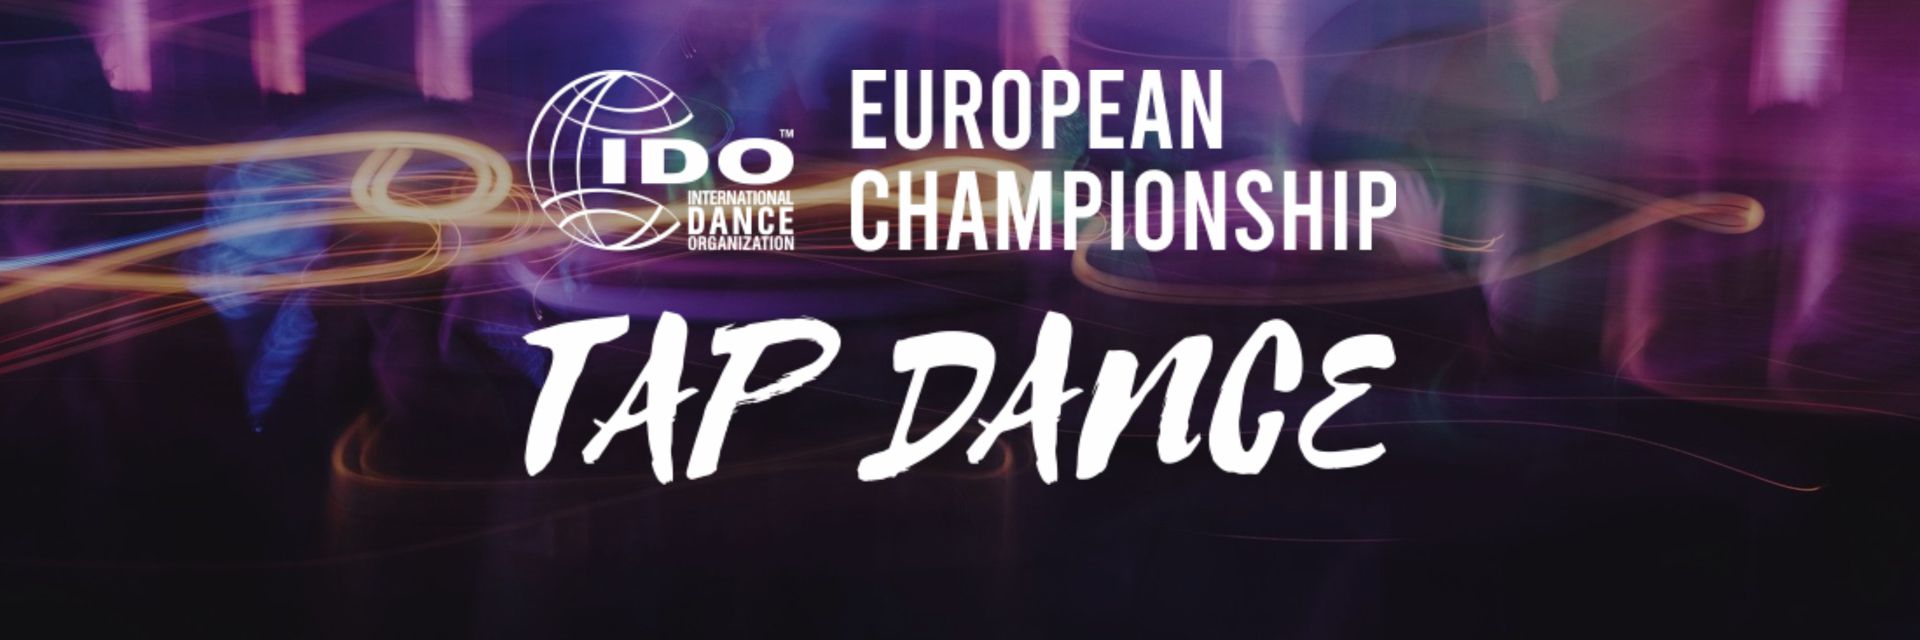 EUROPEAN CHAMPIONSHIP TAP DANCE 2022